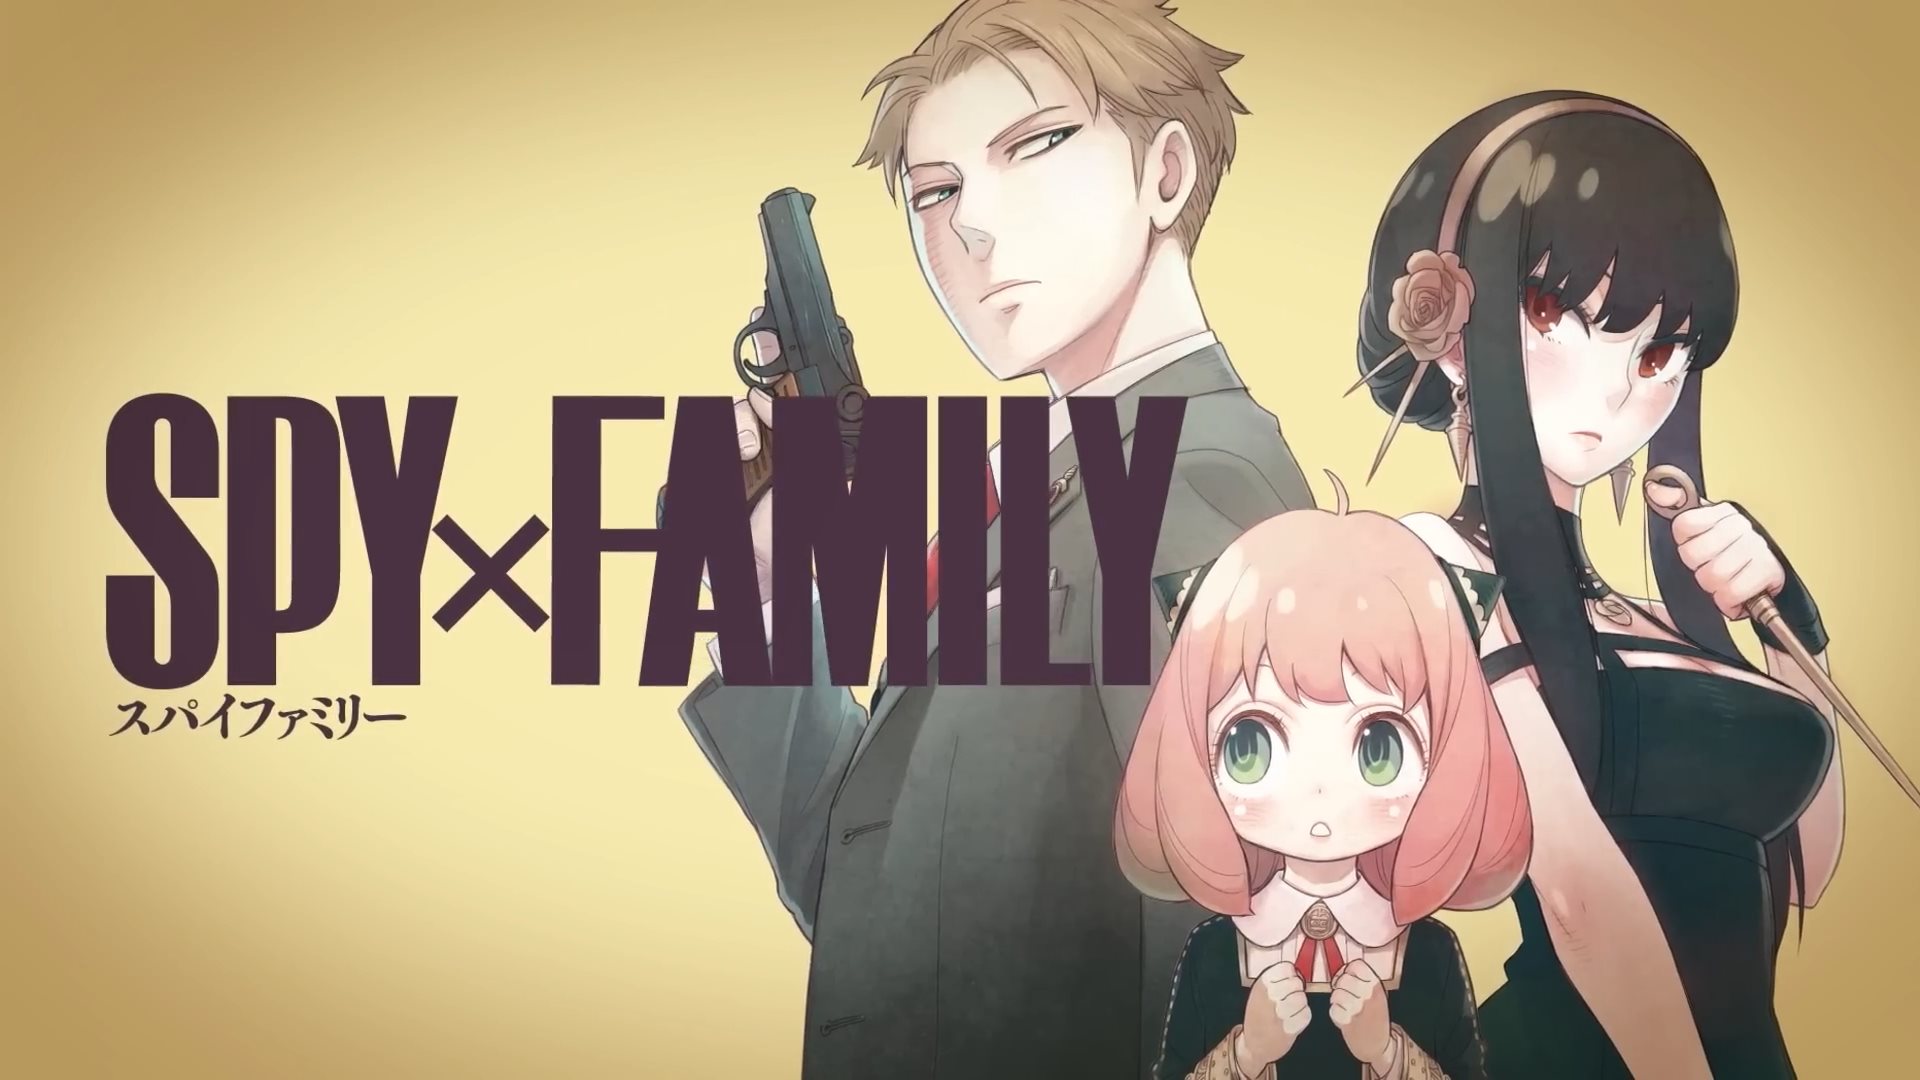 SPY × FAMILY, Anime Voice-Over Wiki